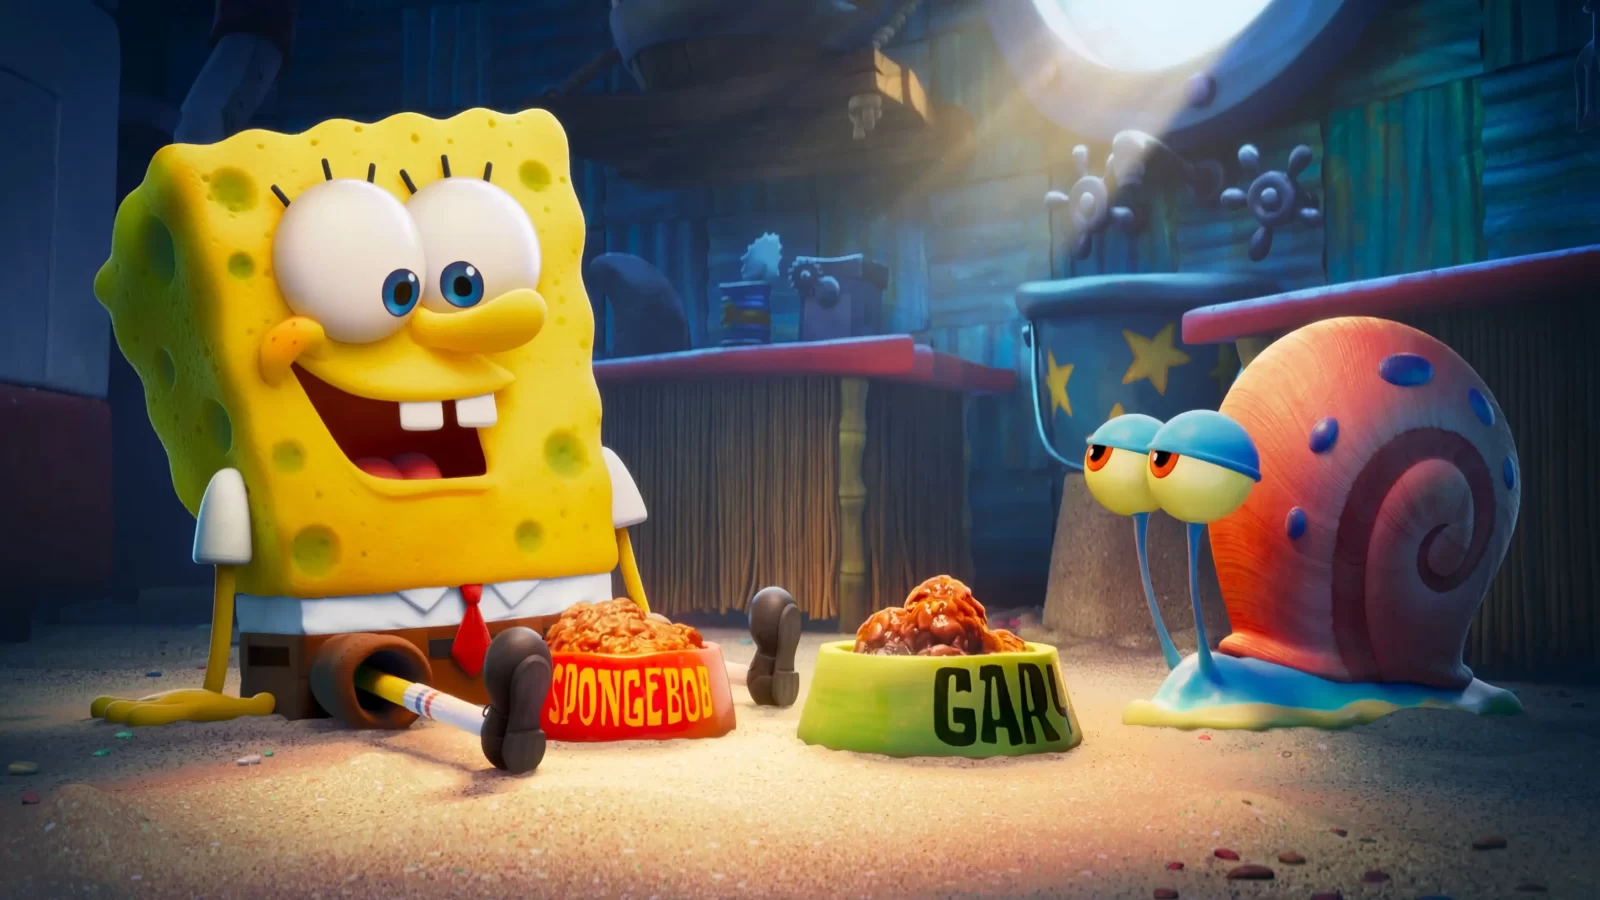 SpongeBob SquarePants and Gary the Snail